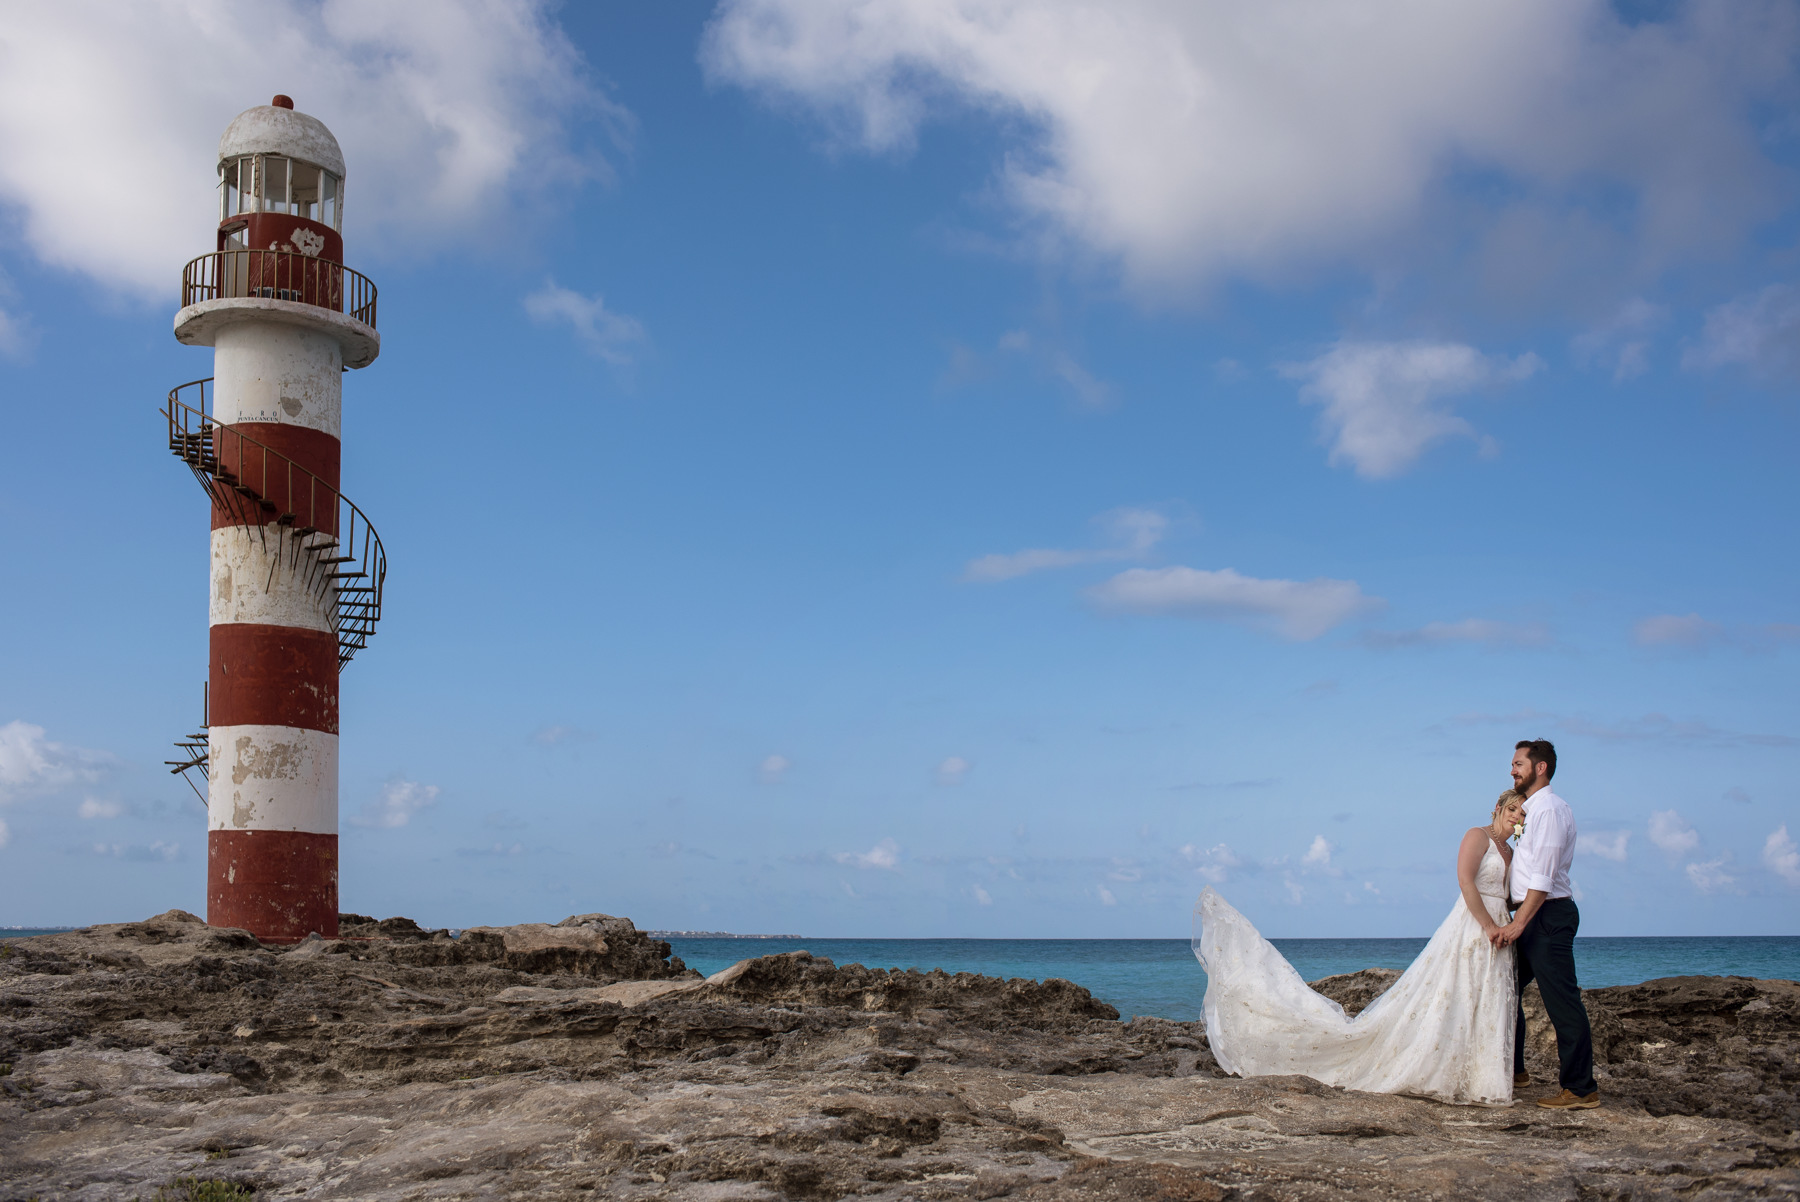 Hyatt Ziva Lighthouse wedding bride and groom portrait Cancun Mexico